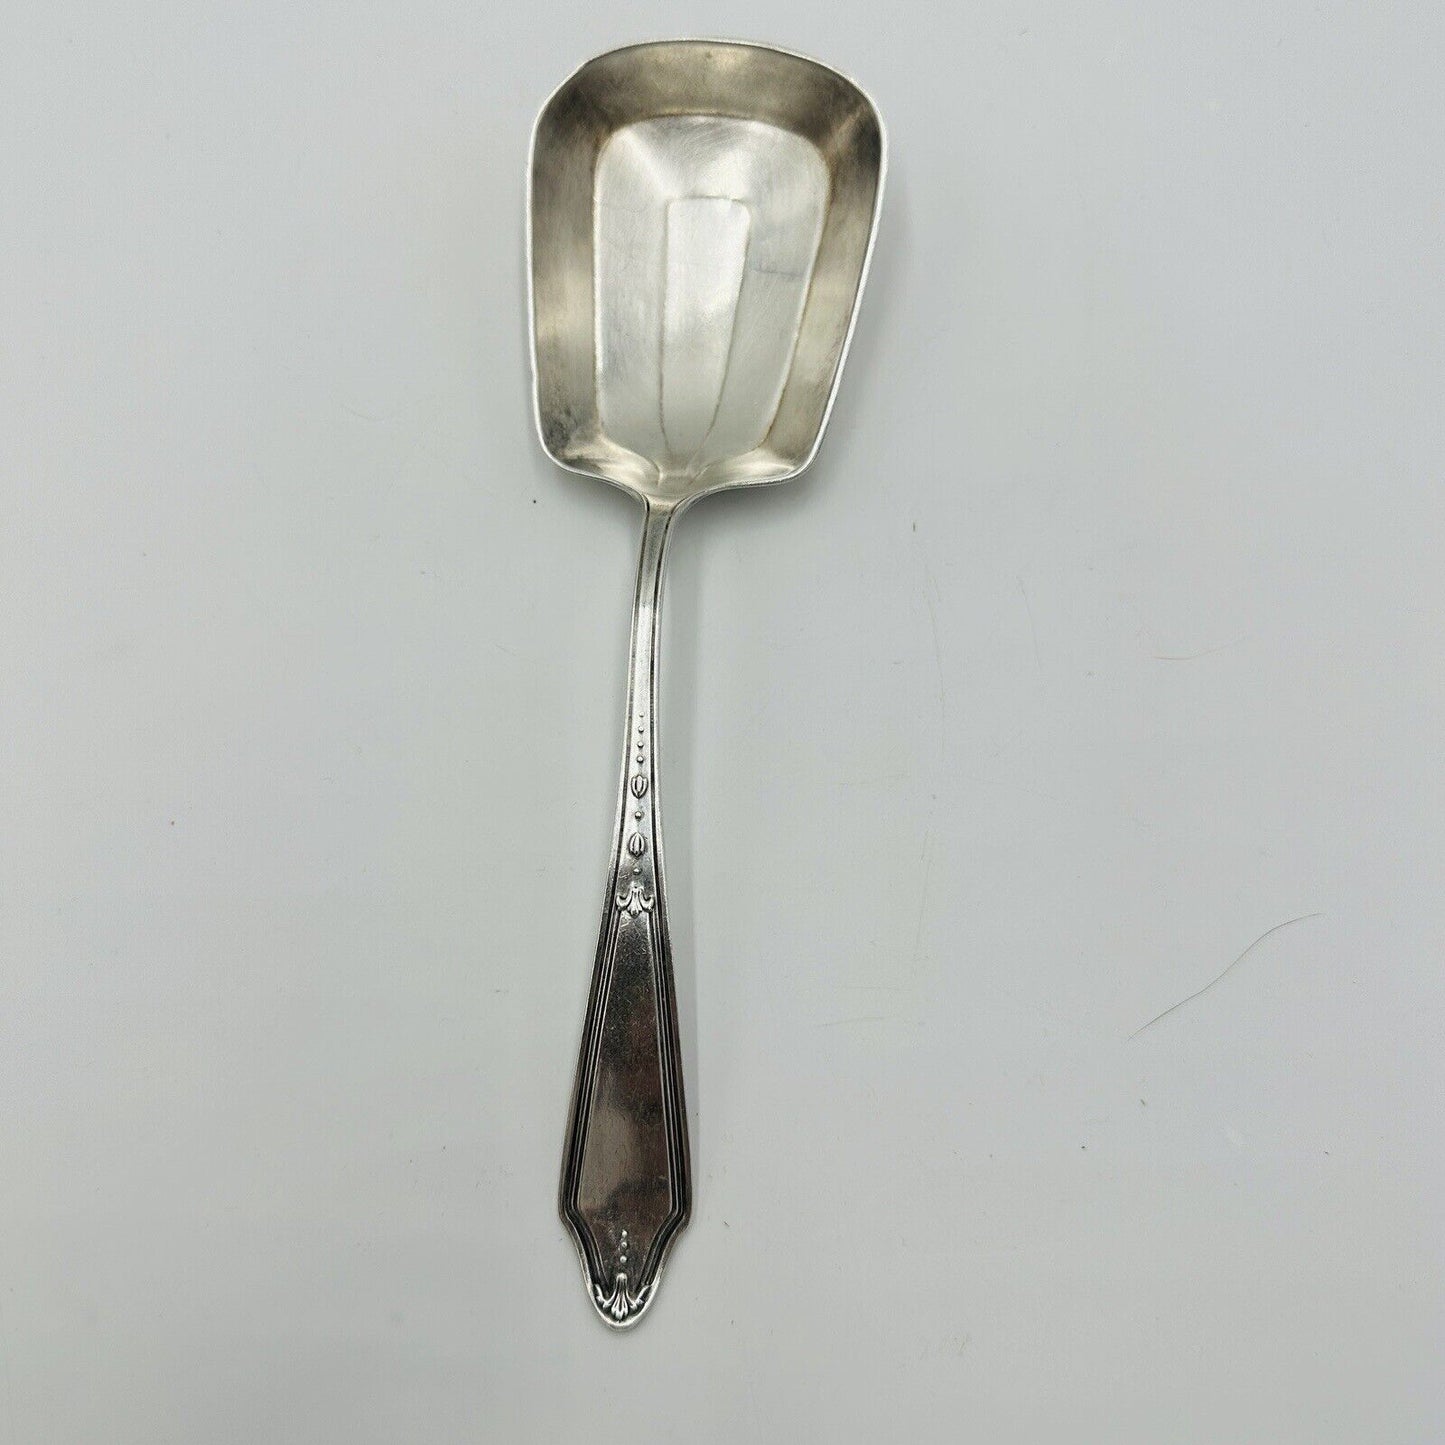 Antique SSMC Sterling Silver Serving Spoon 1932 Ornate Flower Patter 9”